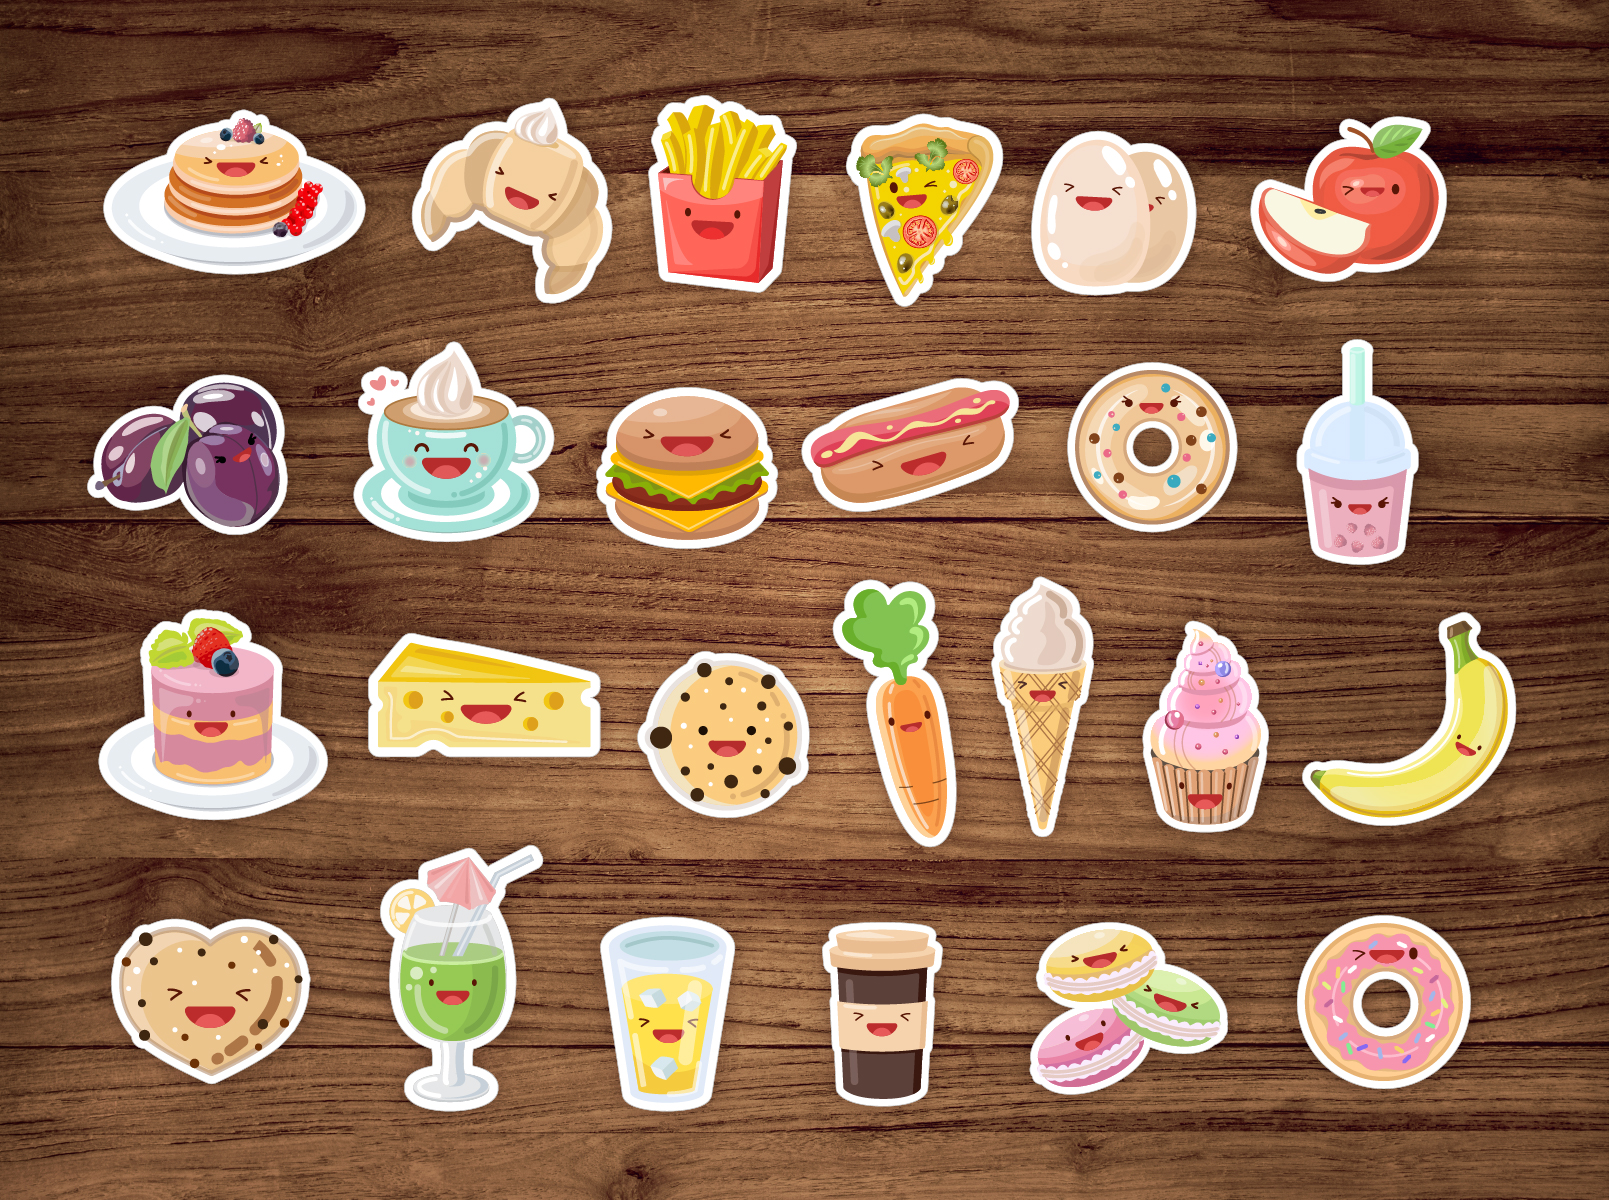 Cute kawaii food stickers. by Mariia Mazaeva on Dribbble